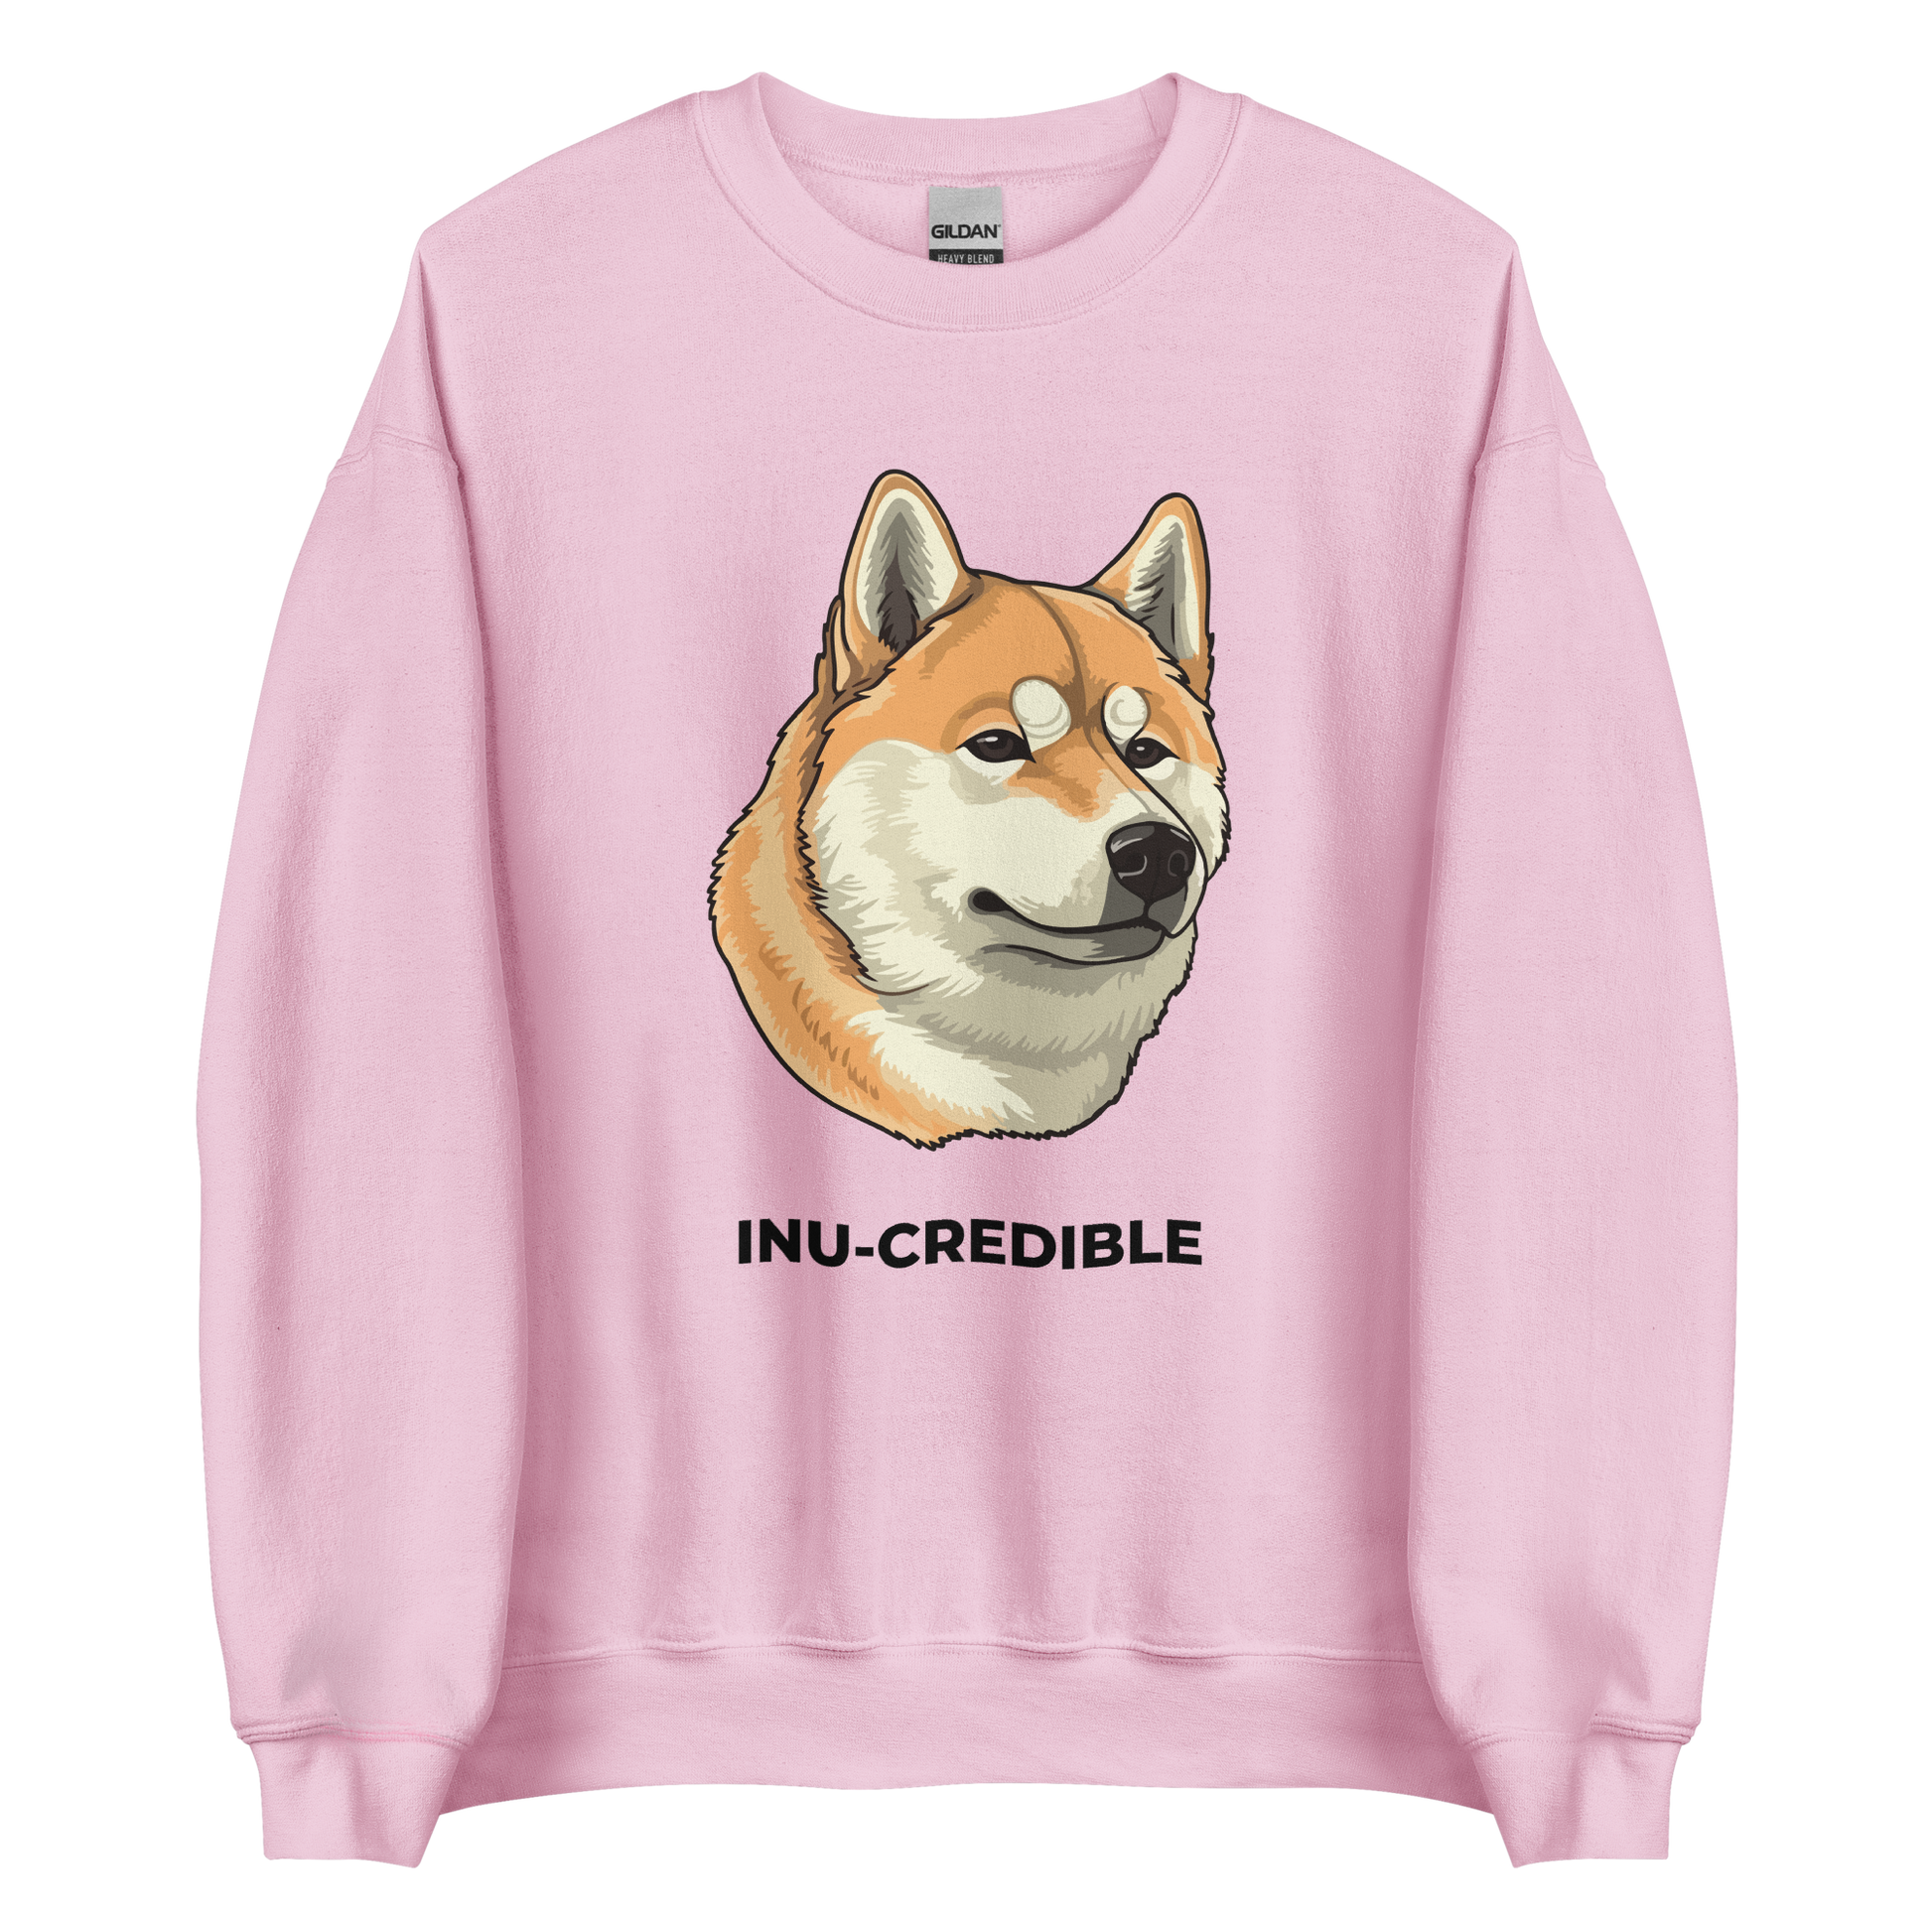 Light Pink Shiba Inu Sweatshirt featuring the Inu-Credible graphic on the chest - Funny Graphic Shiba Inu Sweatshirts - Boozy Fox